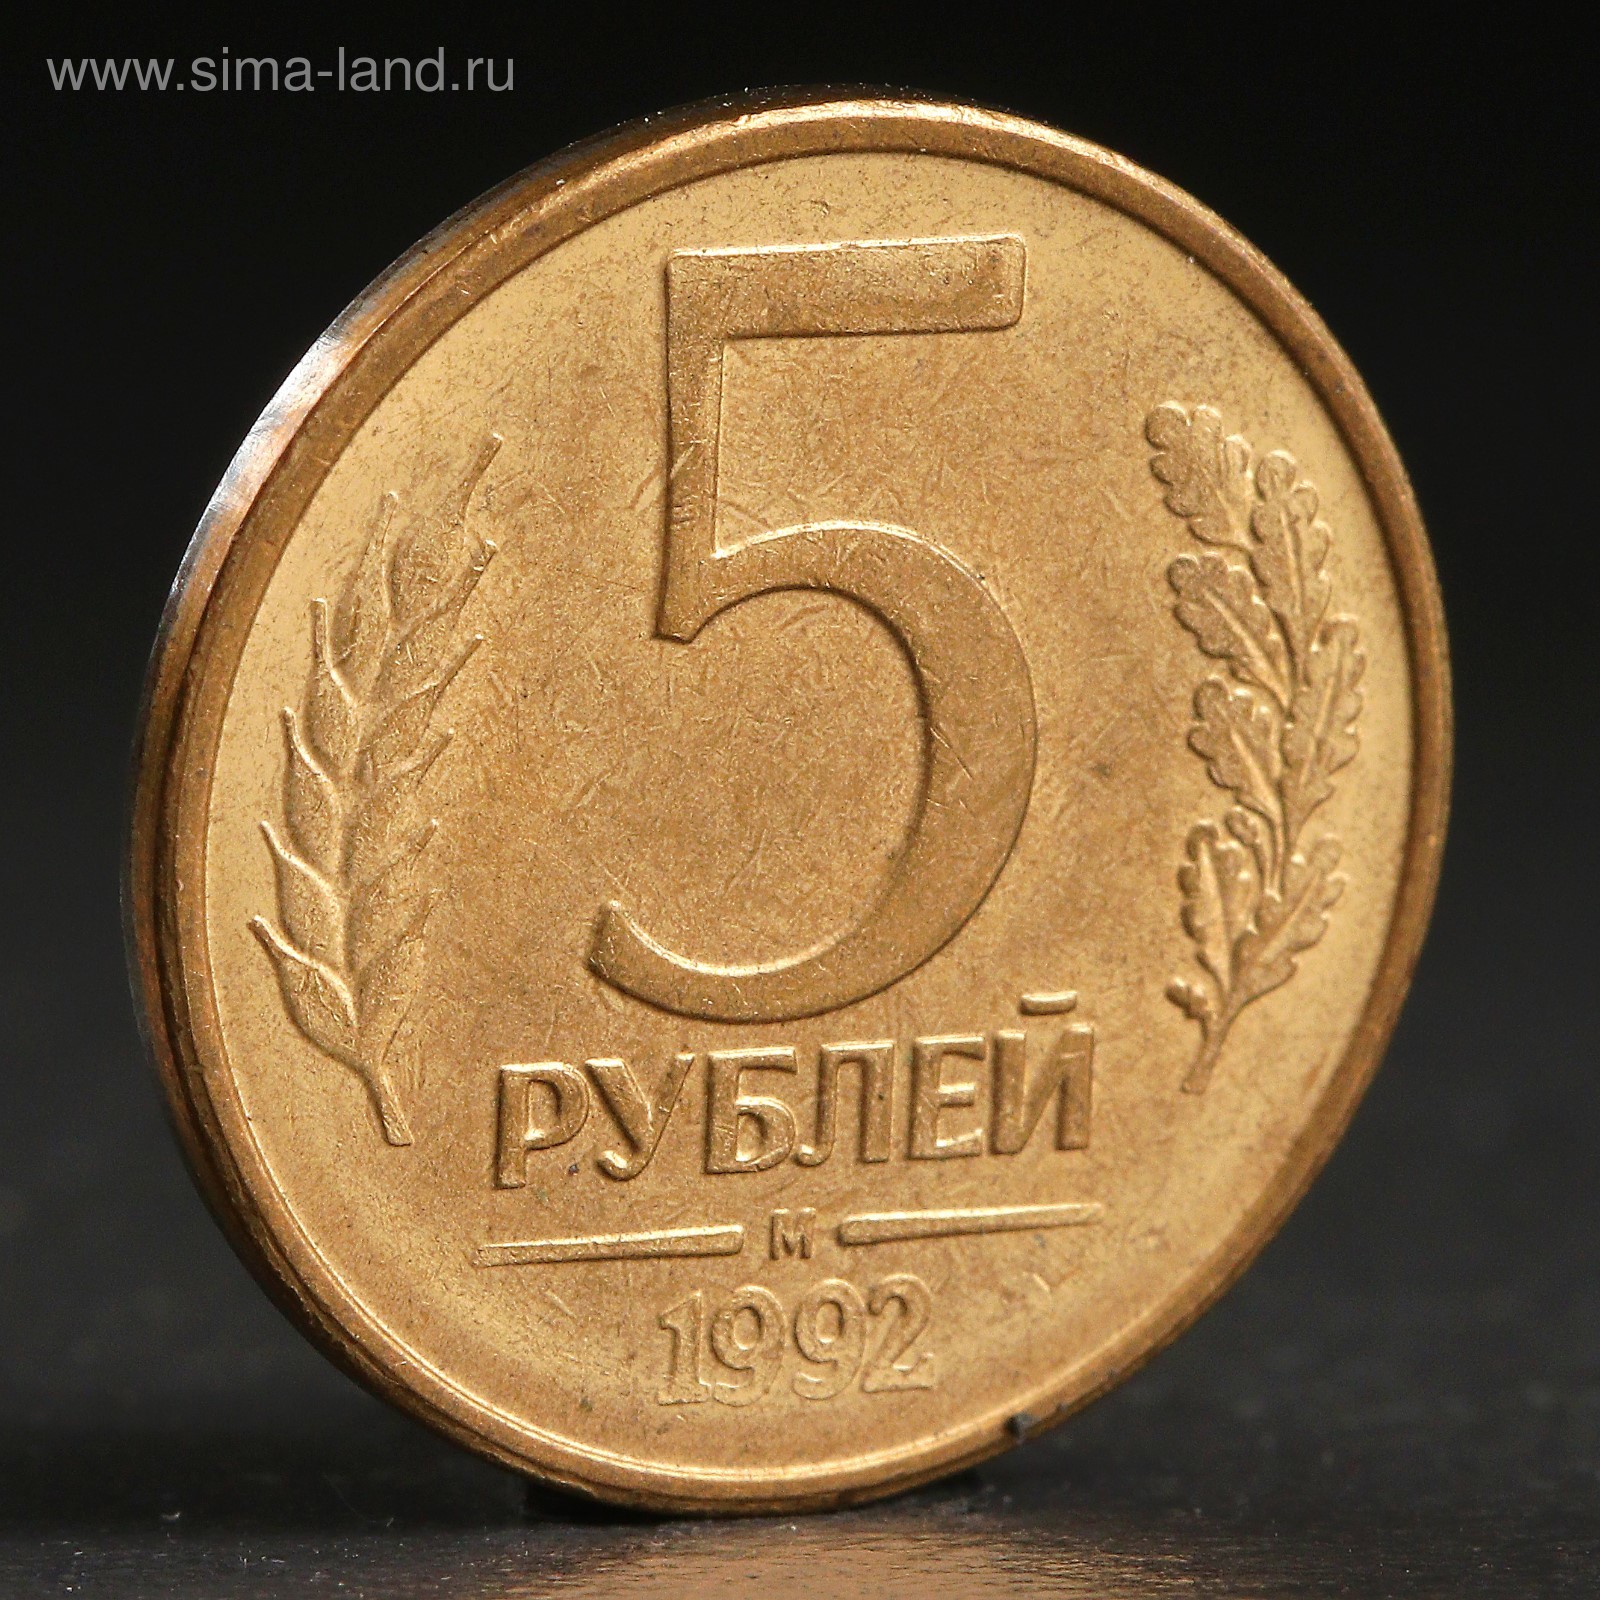 7 5 в рублях. Монета 5 рублей года 1992 м. Монета 5 рублей 1992 л. Монета 5 рублей 1992. Российская монета 5 рублей.